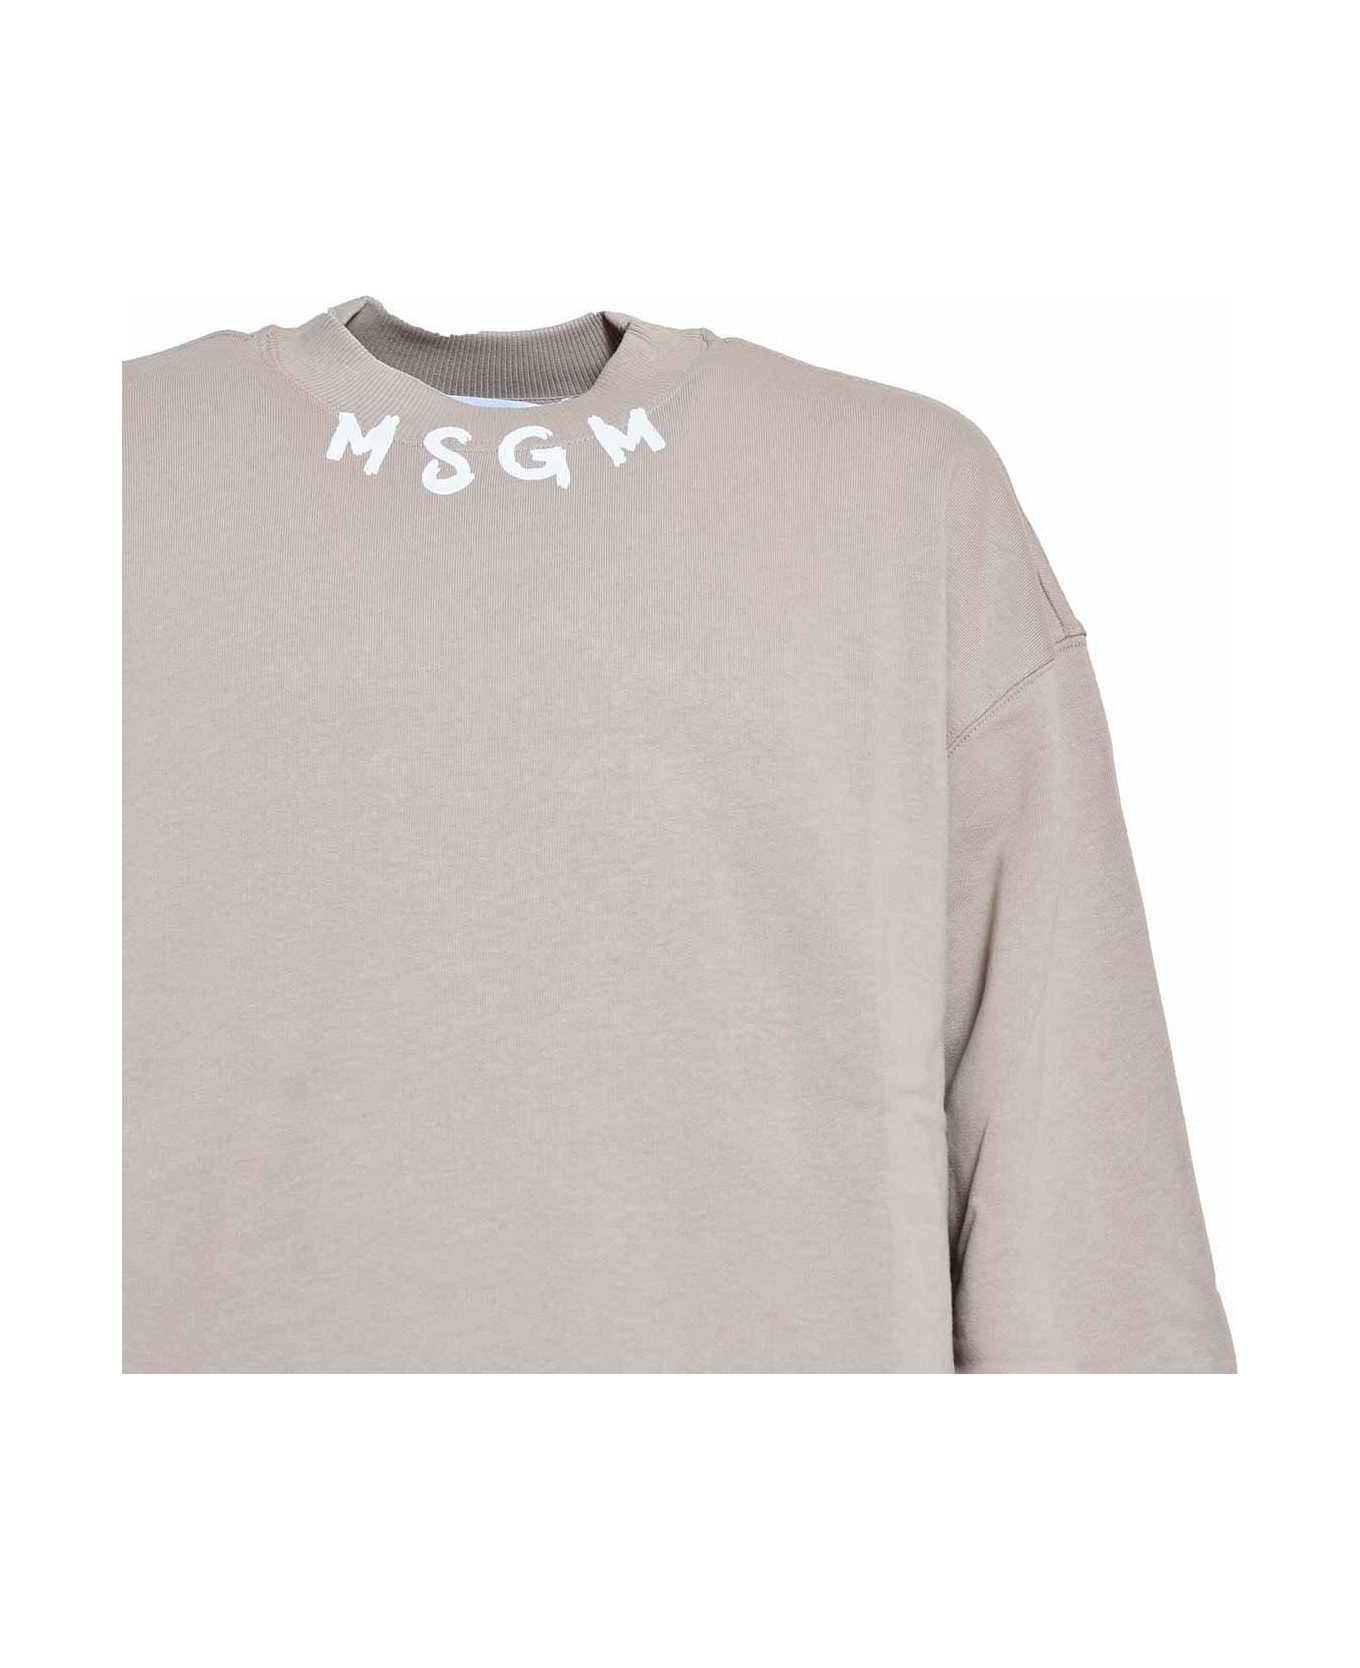 MSGM Logo Printed Crewneck Sweatshirt - Tortora